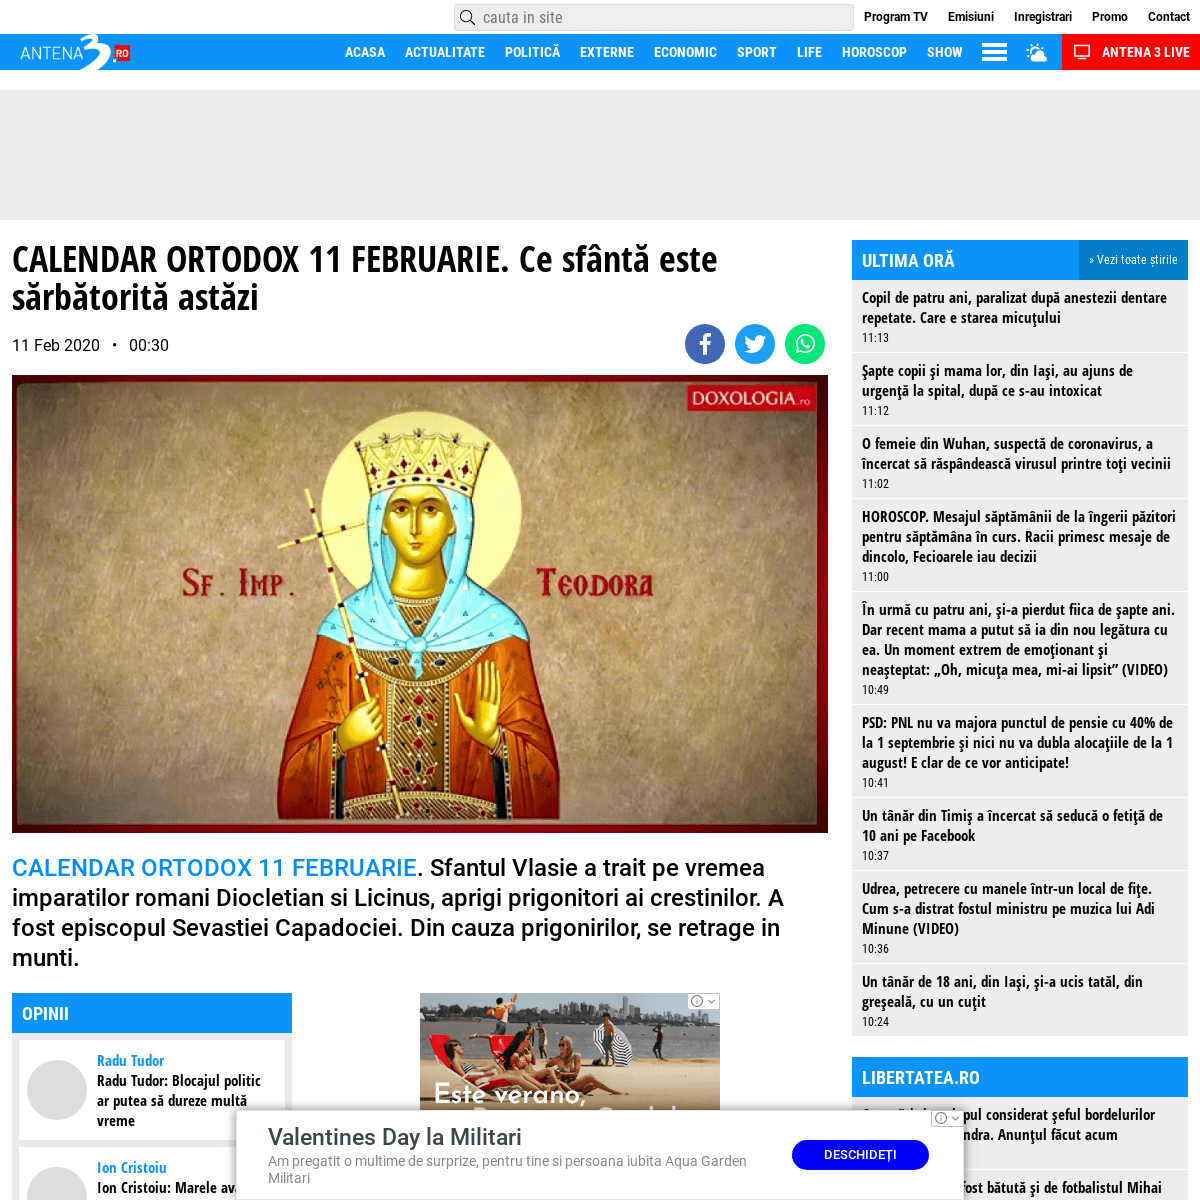 A complete backup of www.antena3.ro/actualitate/religie/calendar-ortodox-11-februarie-ce-sfanta-este-sarbatorita-astazi-558185.h